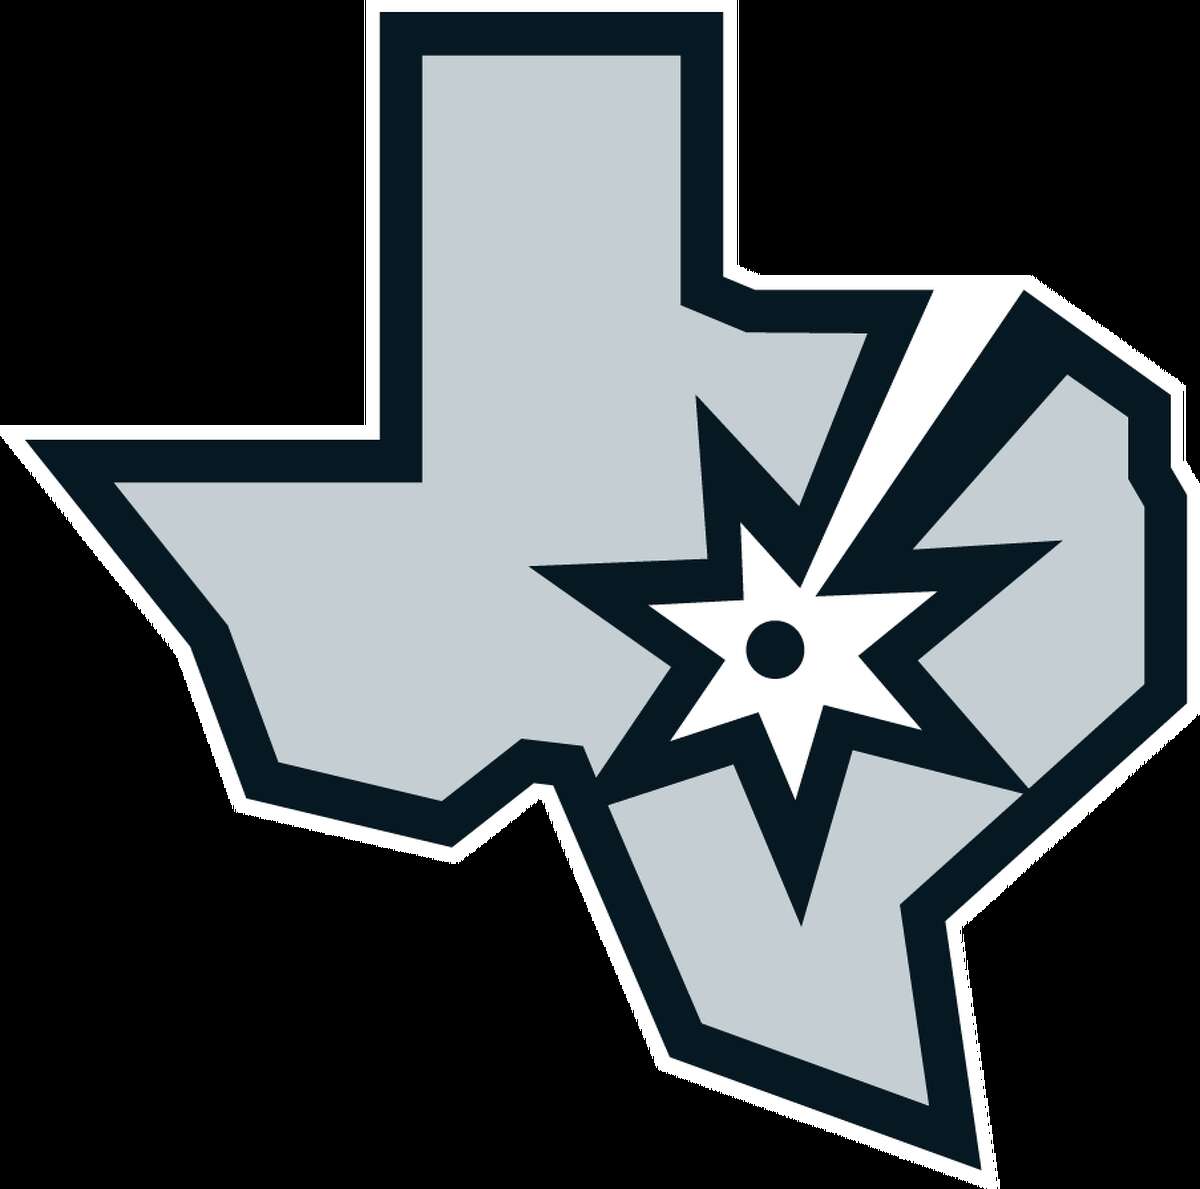 Spurs highlight San Antonio in newly released alternate logos